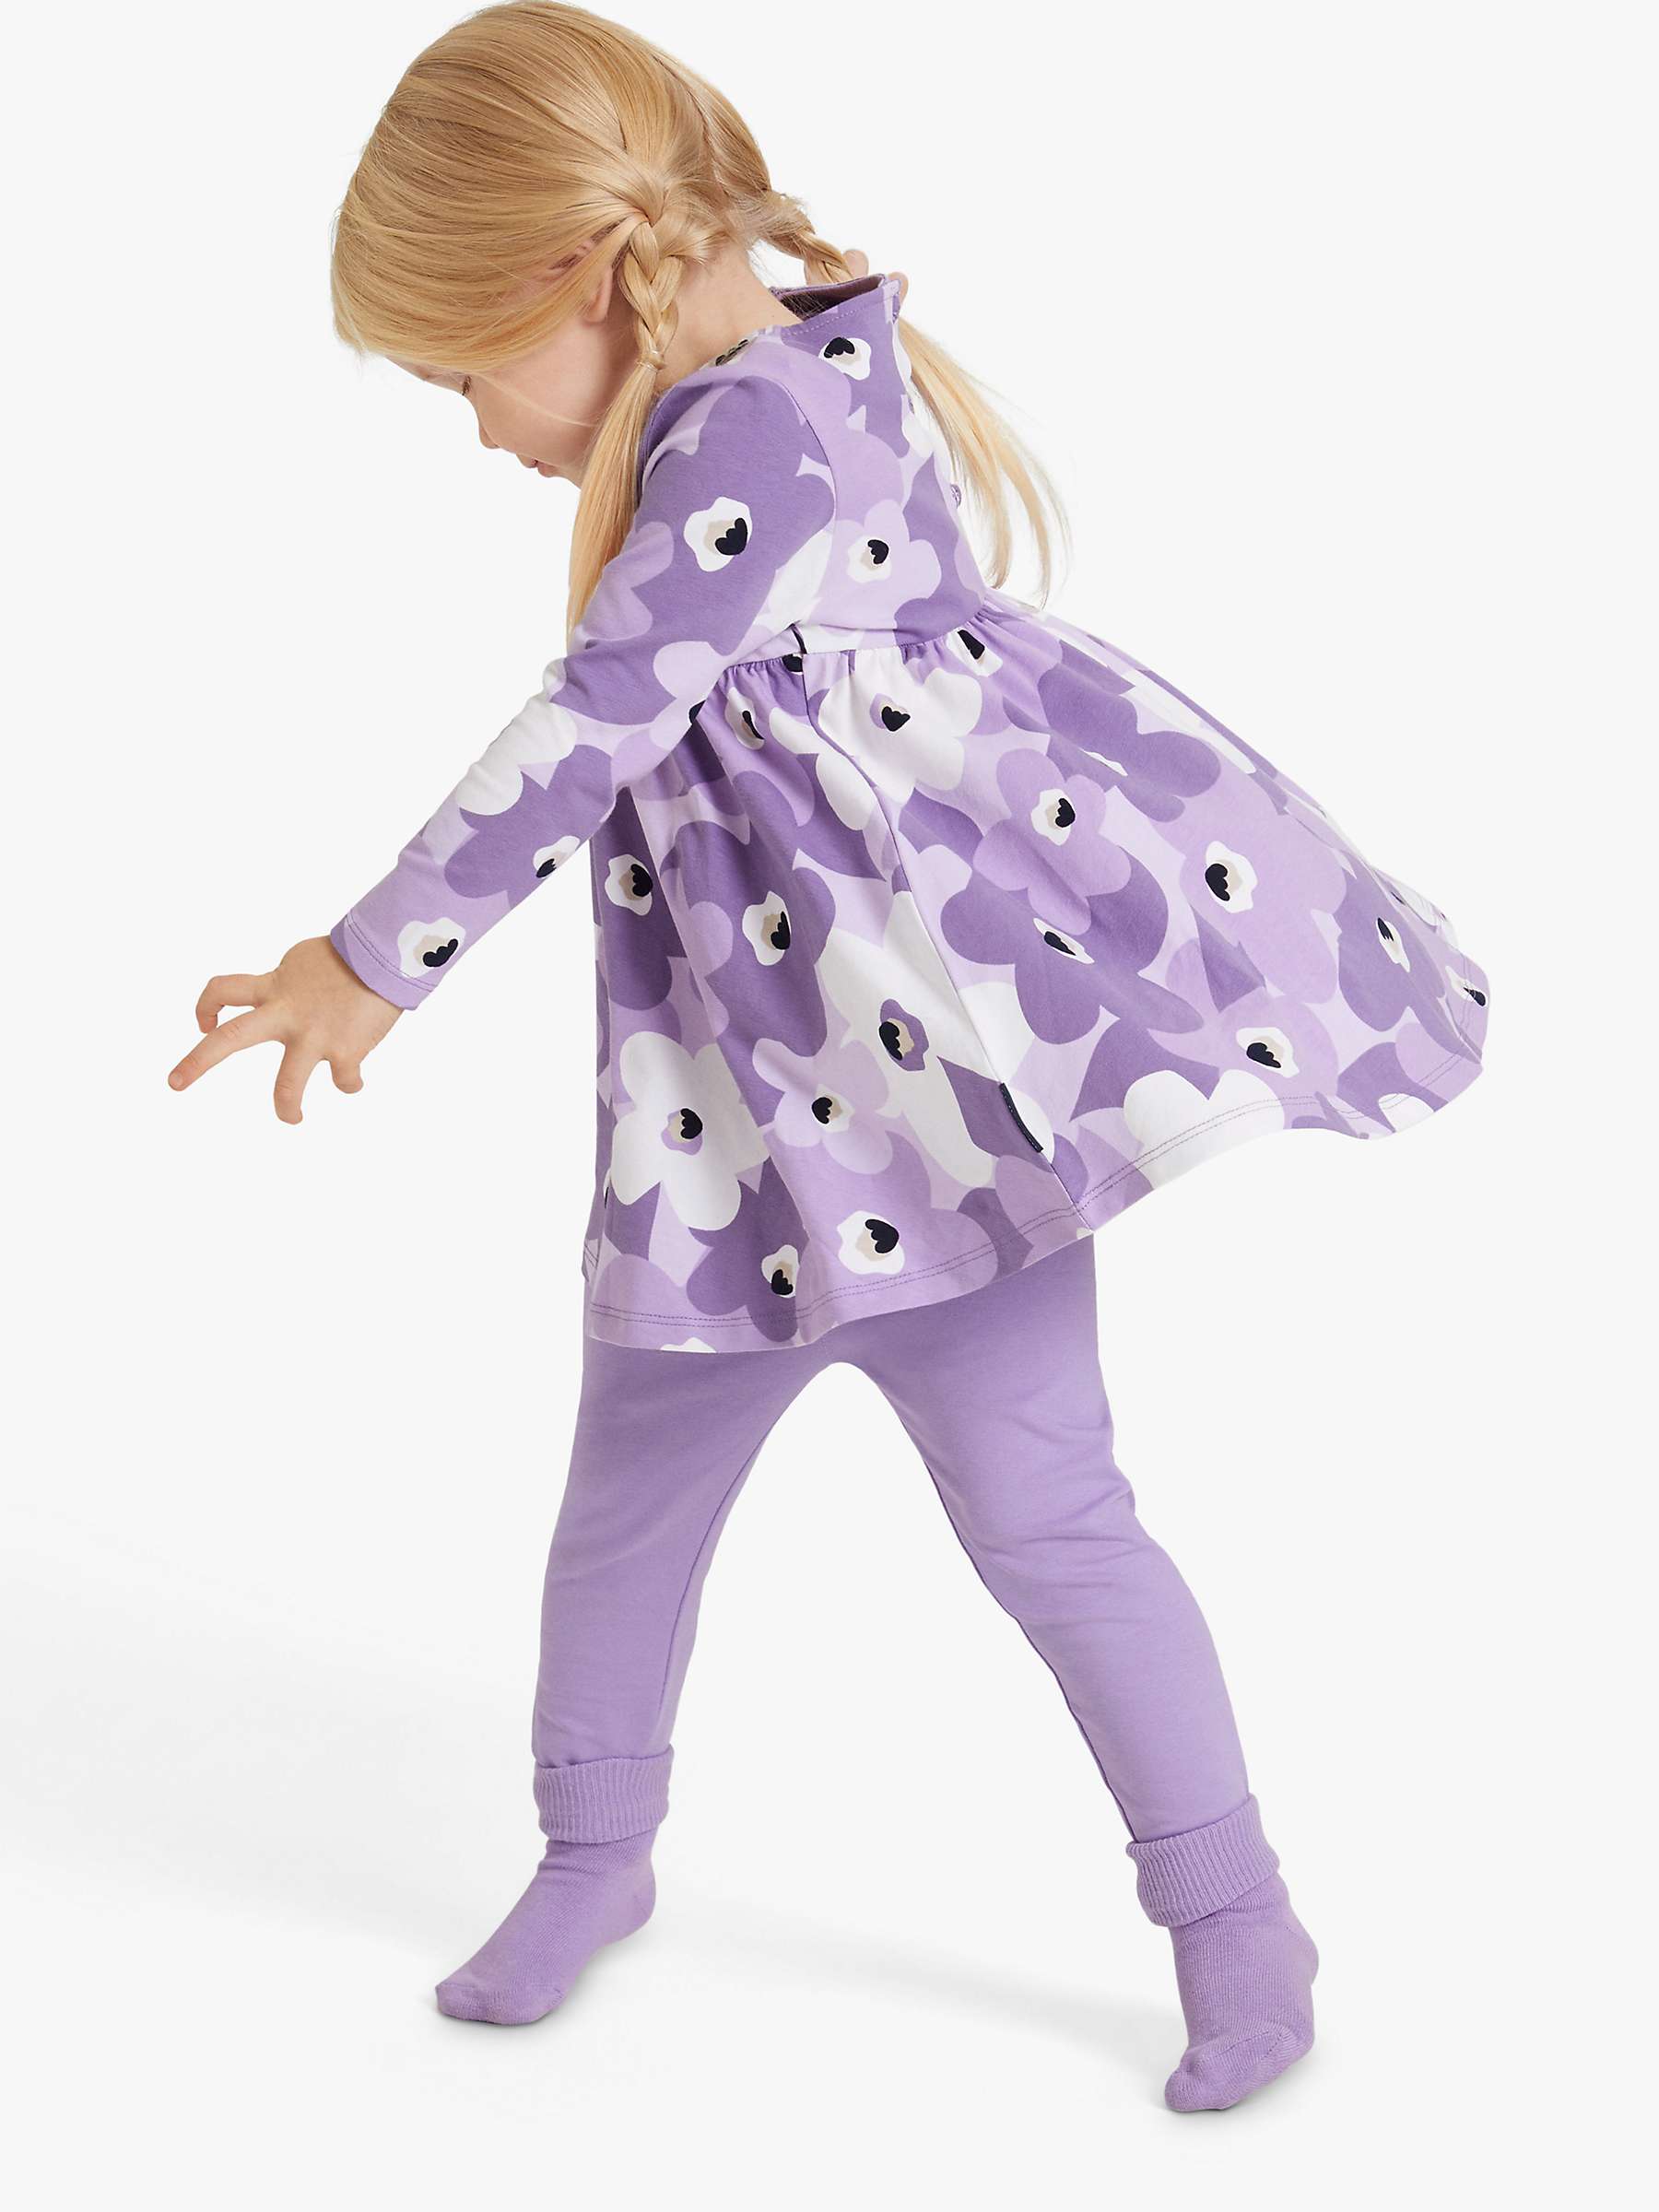 Buy Polarn O. Pyret Kids' Organic Cotton Floral Print Jersey Dress, Purple Online at johnlewis.com